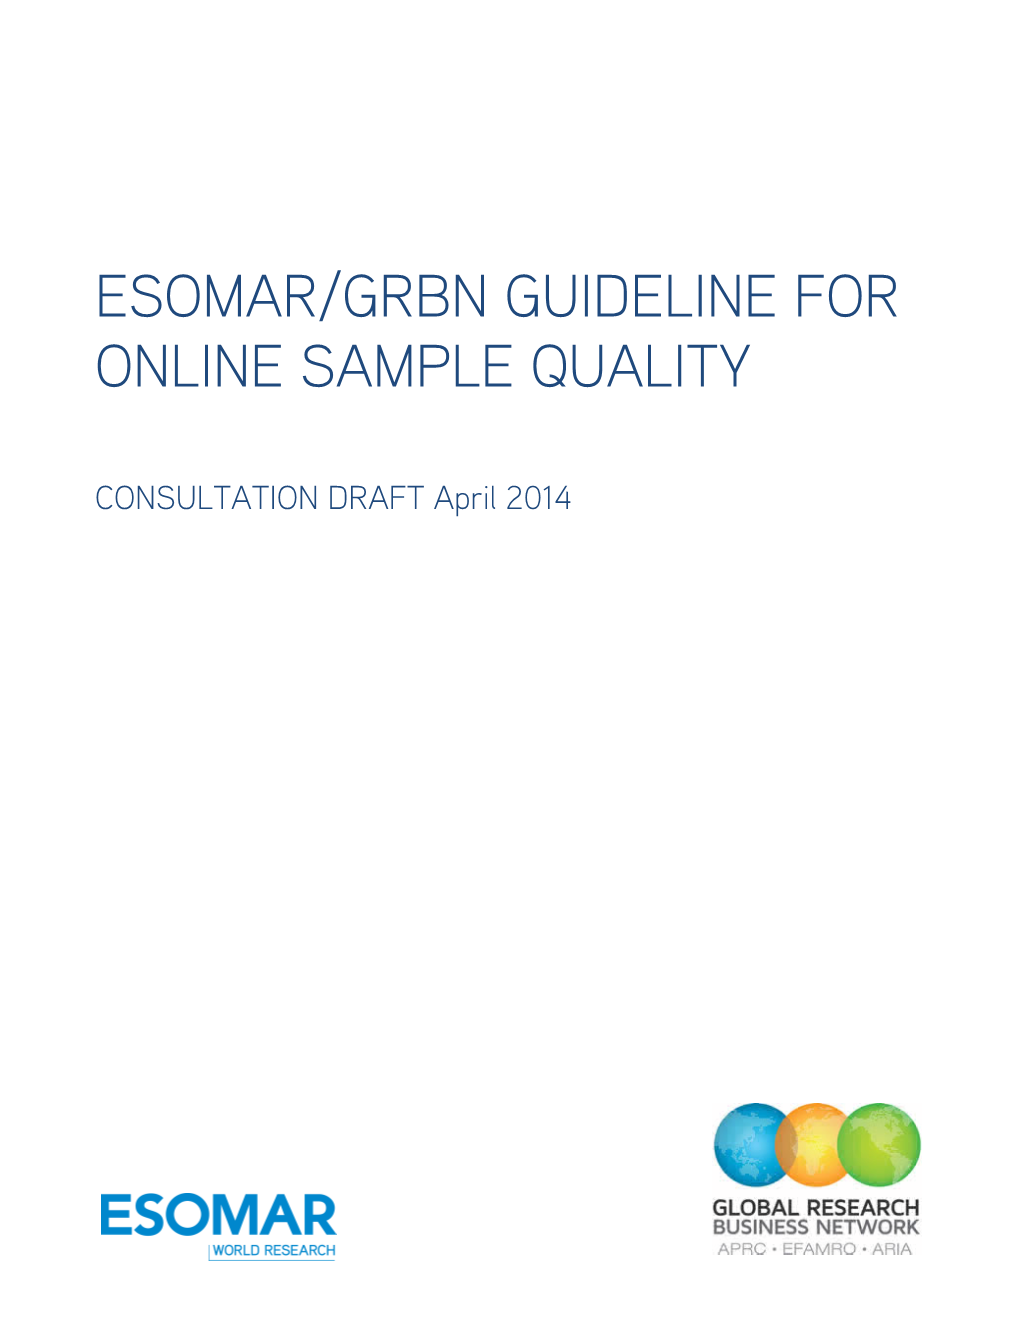 ESOMAR GRBN Draft Online Sample Quality Guideline April 2014